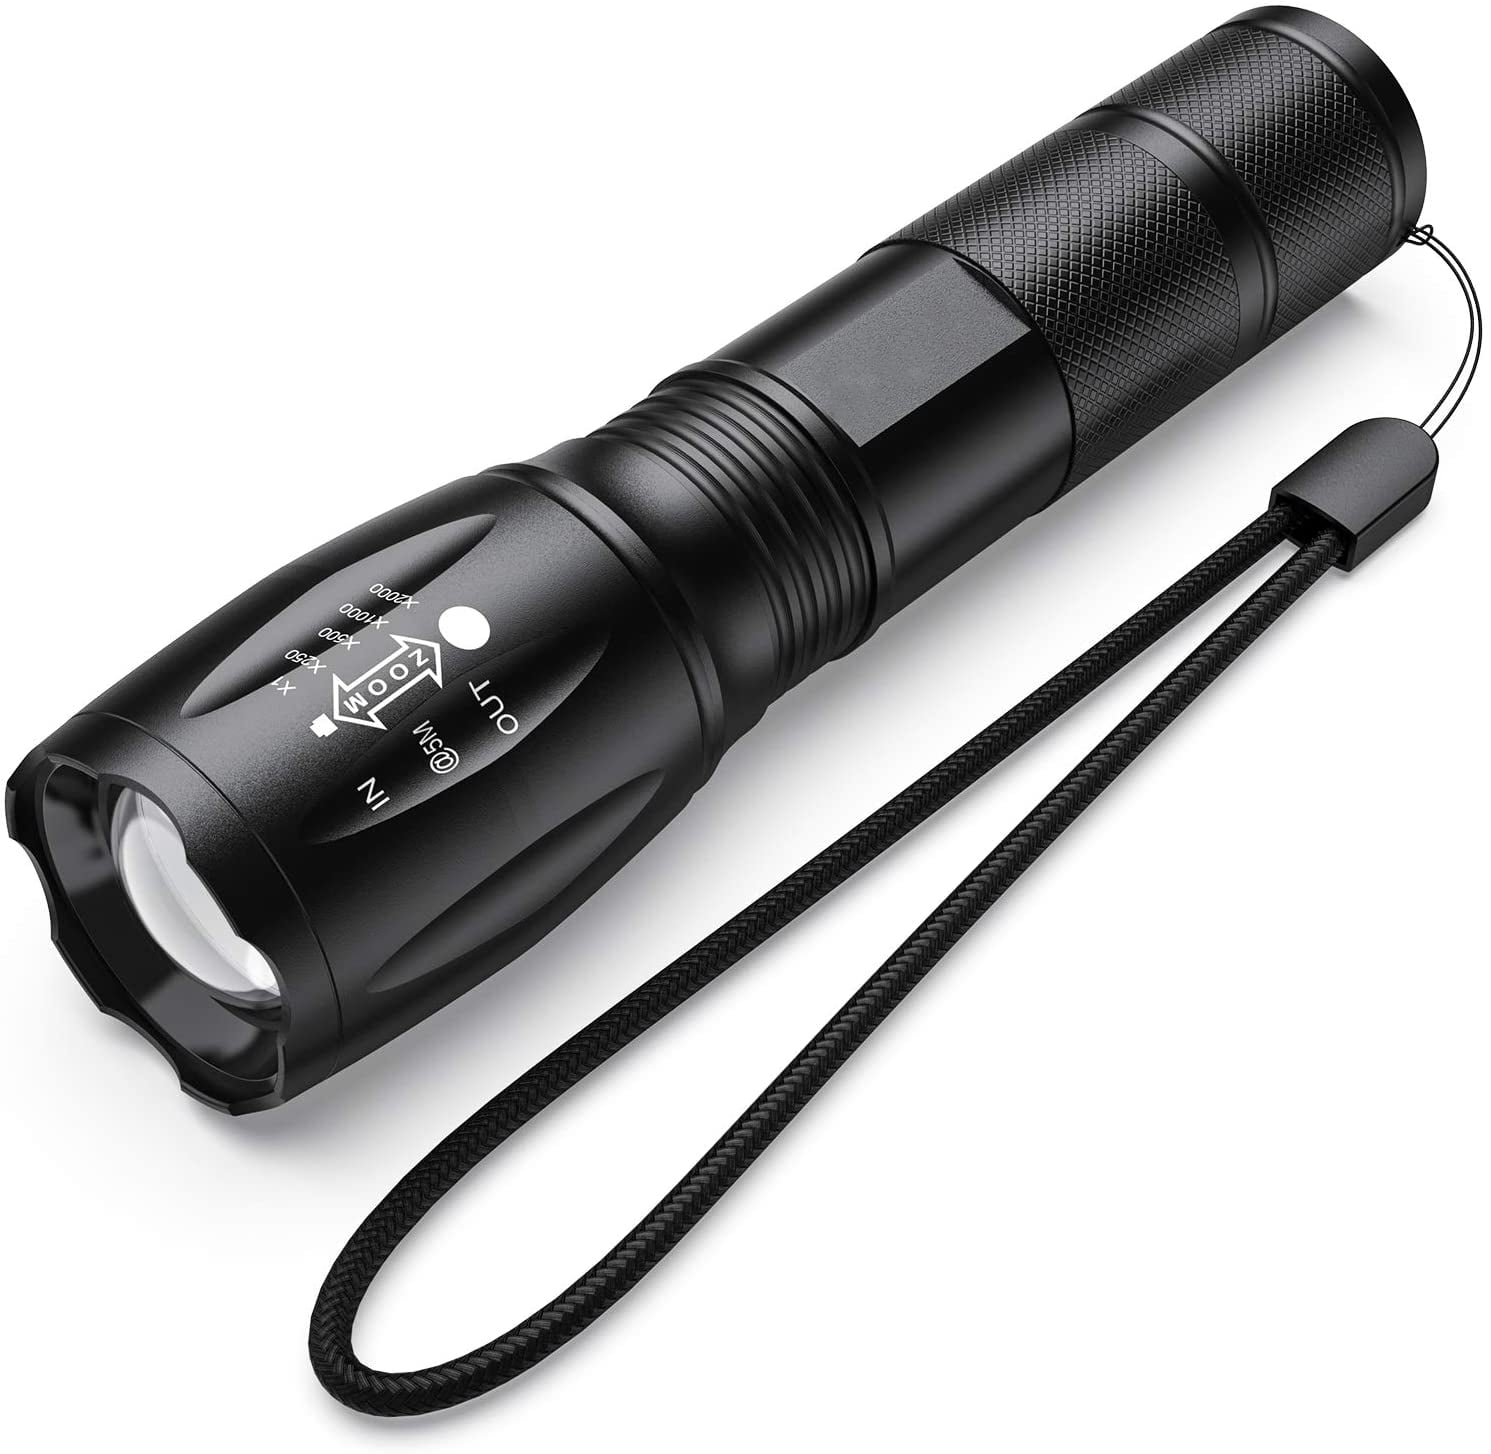 LED Tactical Small Compact Waterproof Flashlights 6 Super Bright Leds Light 4pcs 